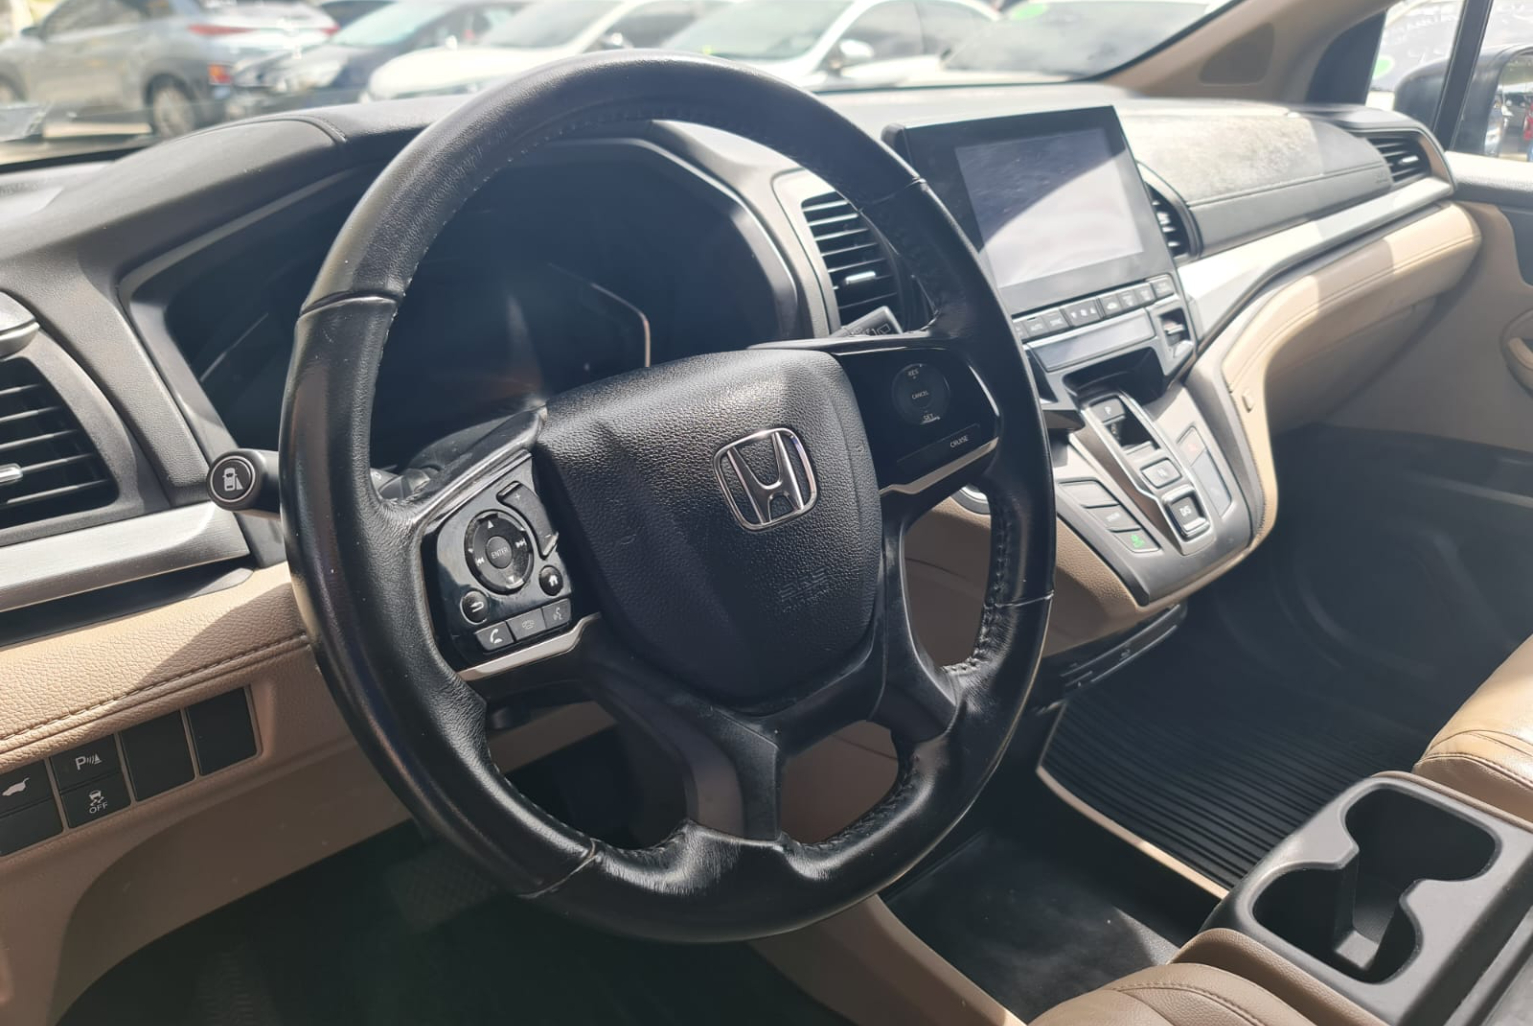 Honda Odyssey 2020 Automático color Gris, Imagen #7